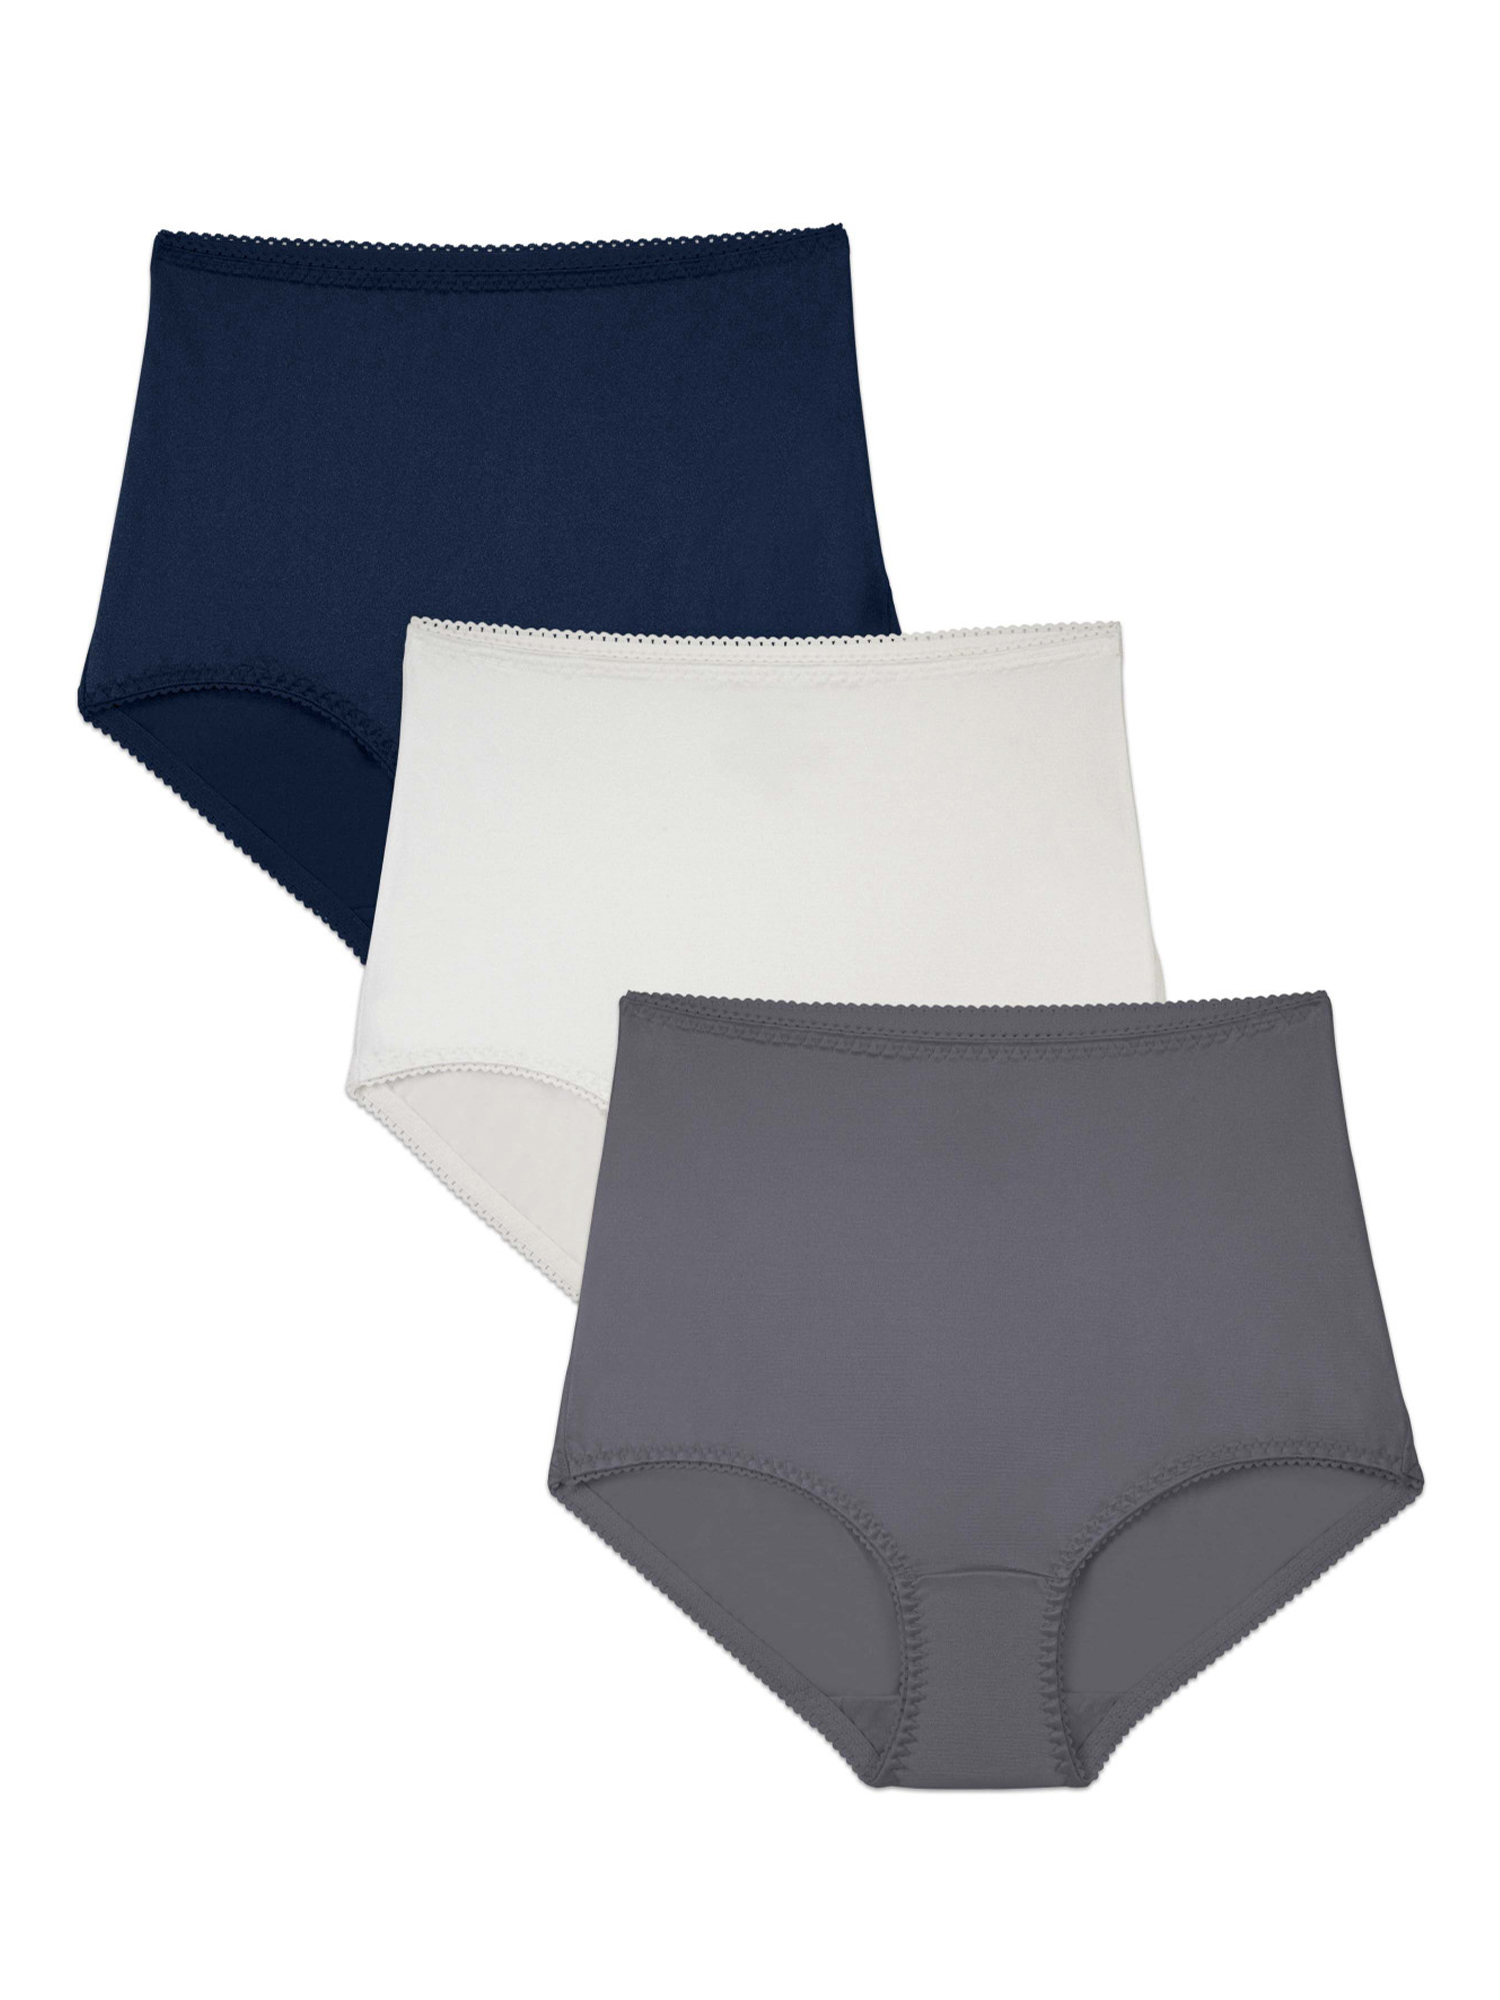 Vanity Fair Radiant Collection Women's Undershapers Brief Underwear, 3 Pack - image 1 of 8